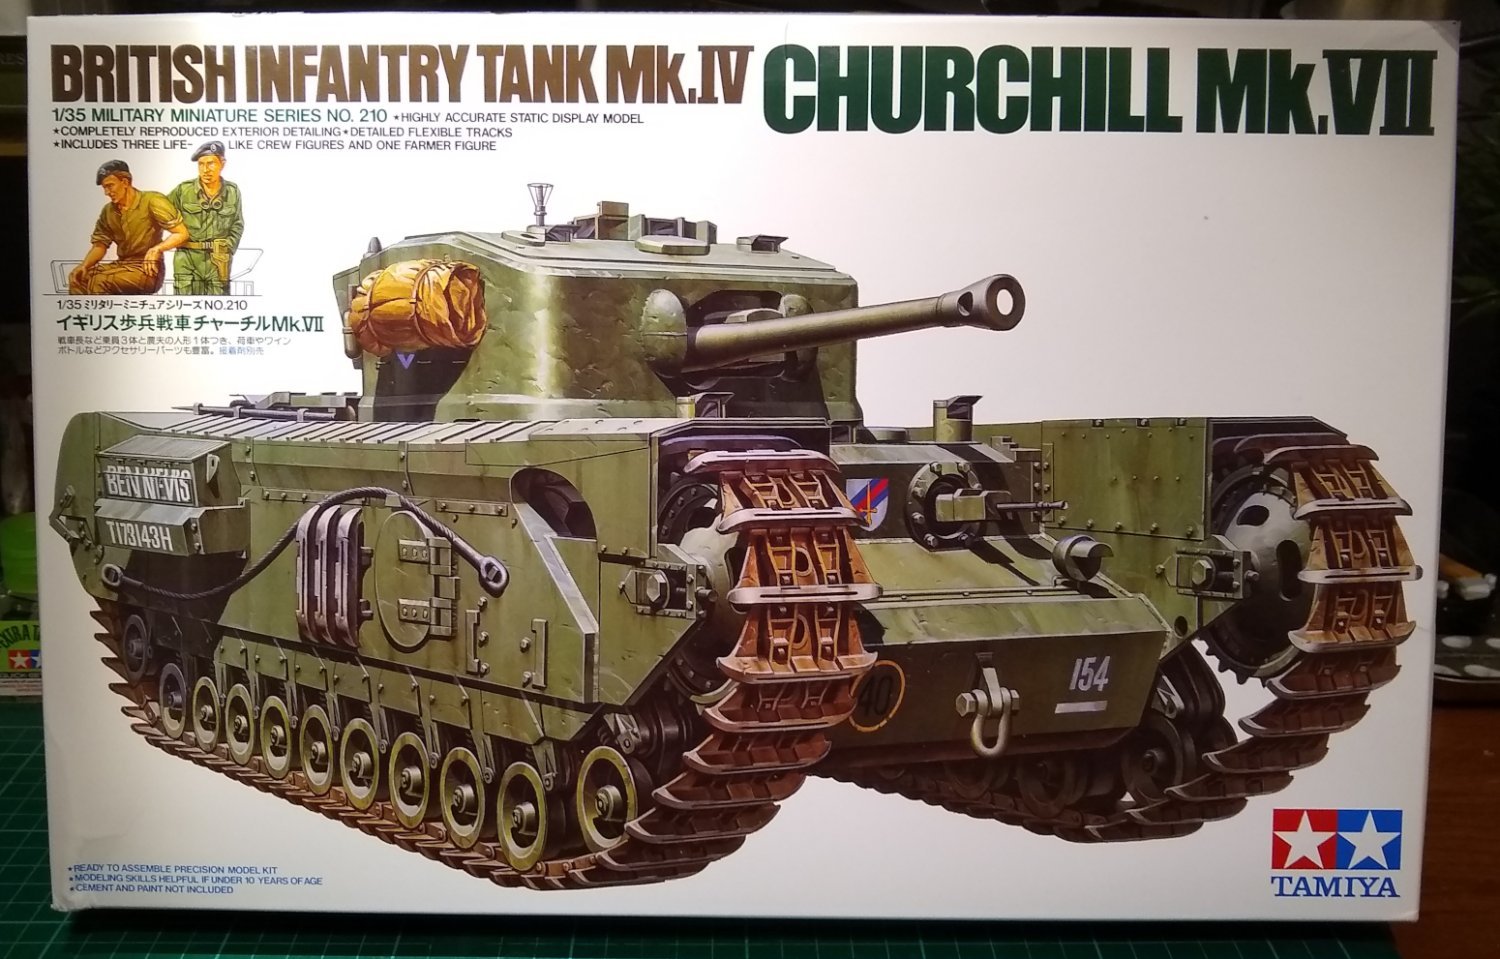 Churchill MkVII tank by Rik Thistle - Tamiya - 1:35 - 1944 -  Non-ship/categorised builds - Model Ship World™